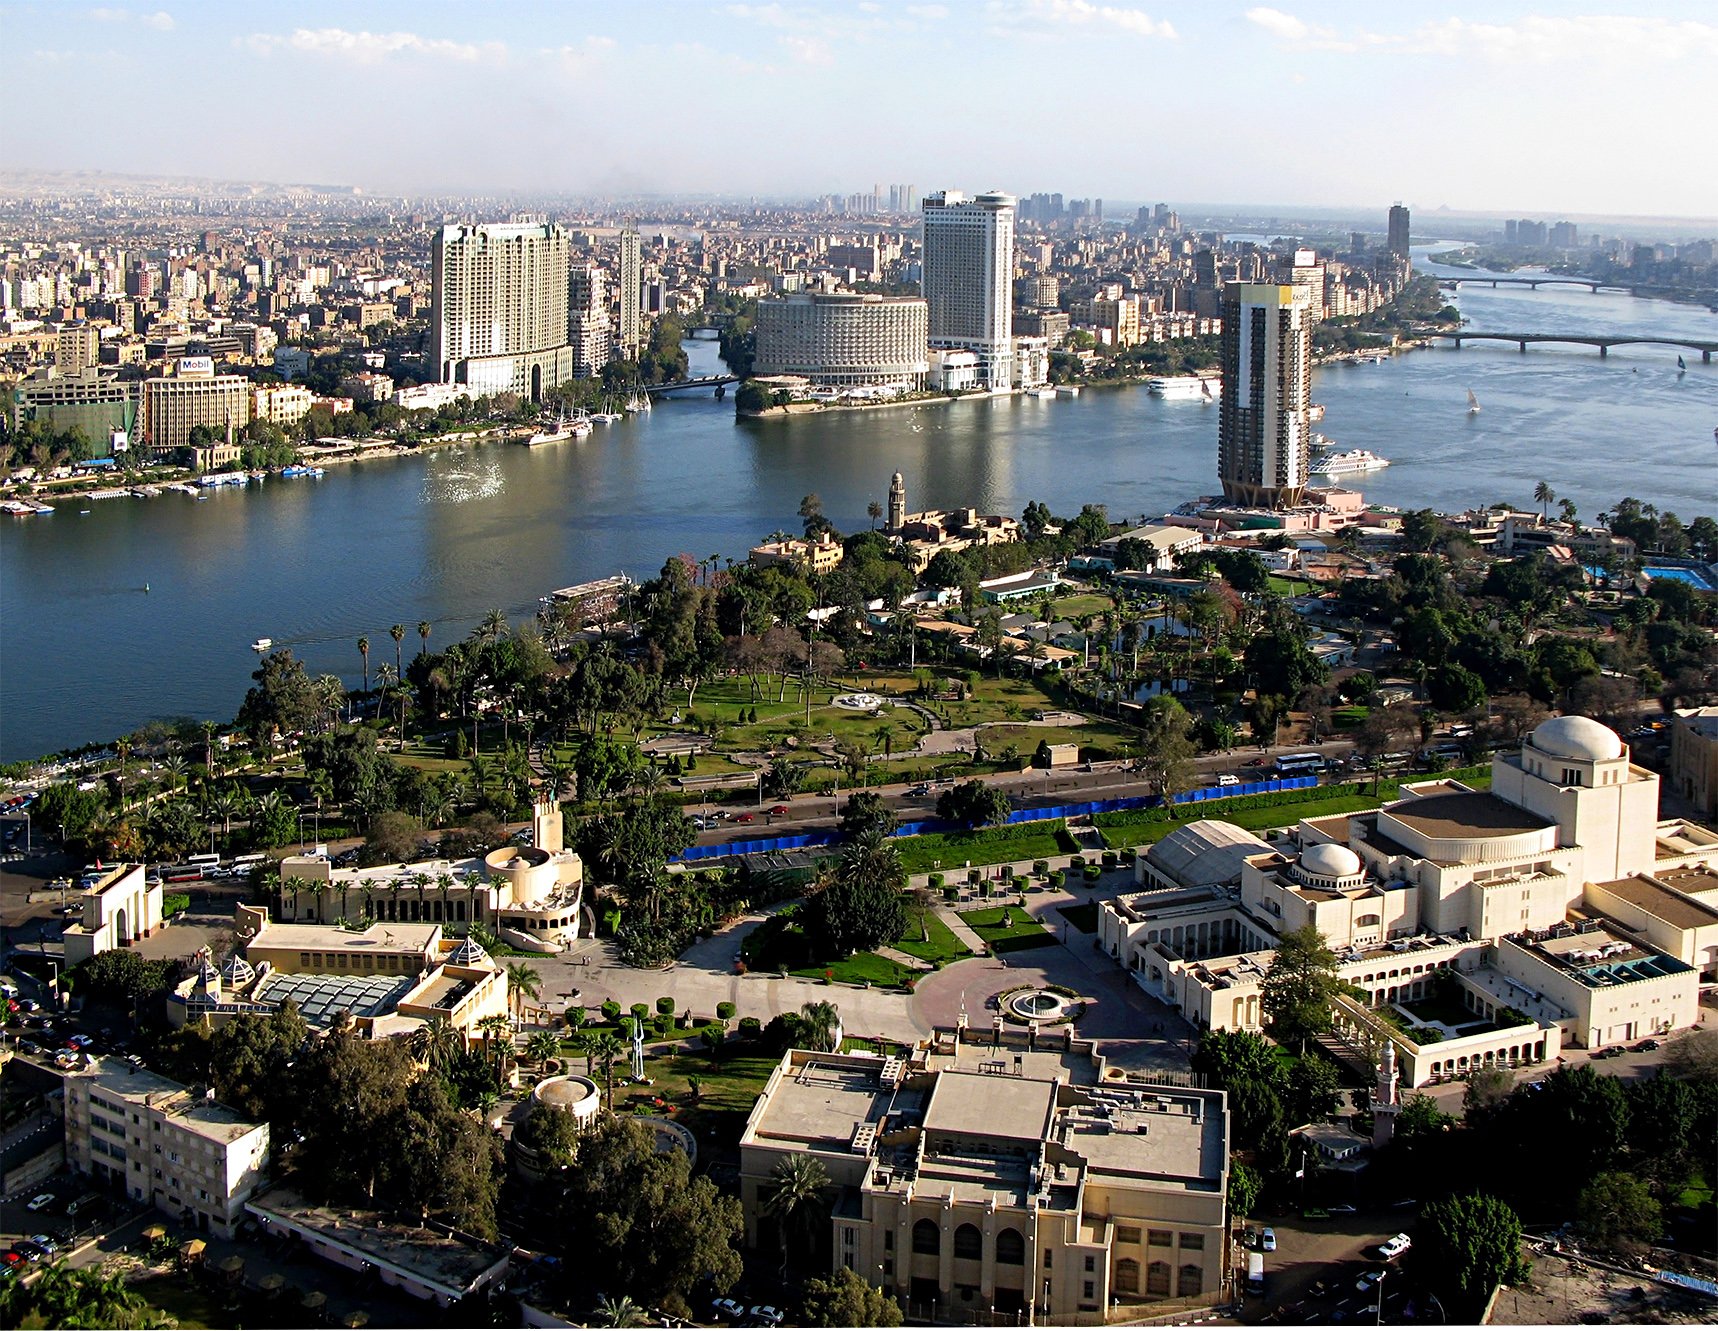 Nile River in Africa